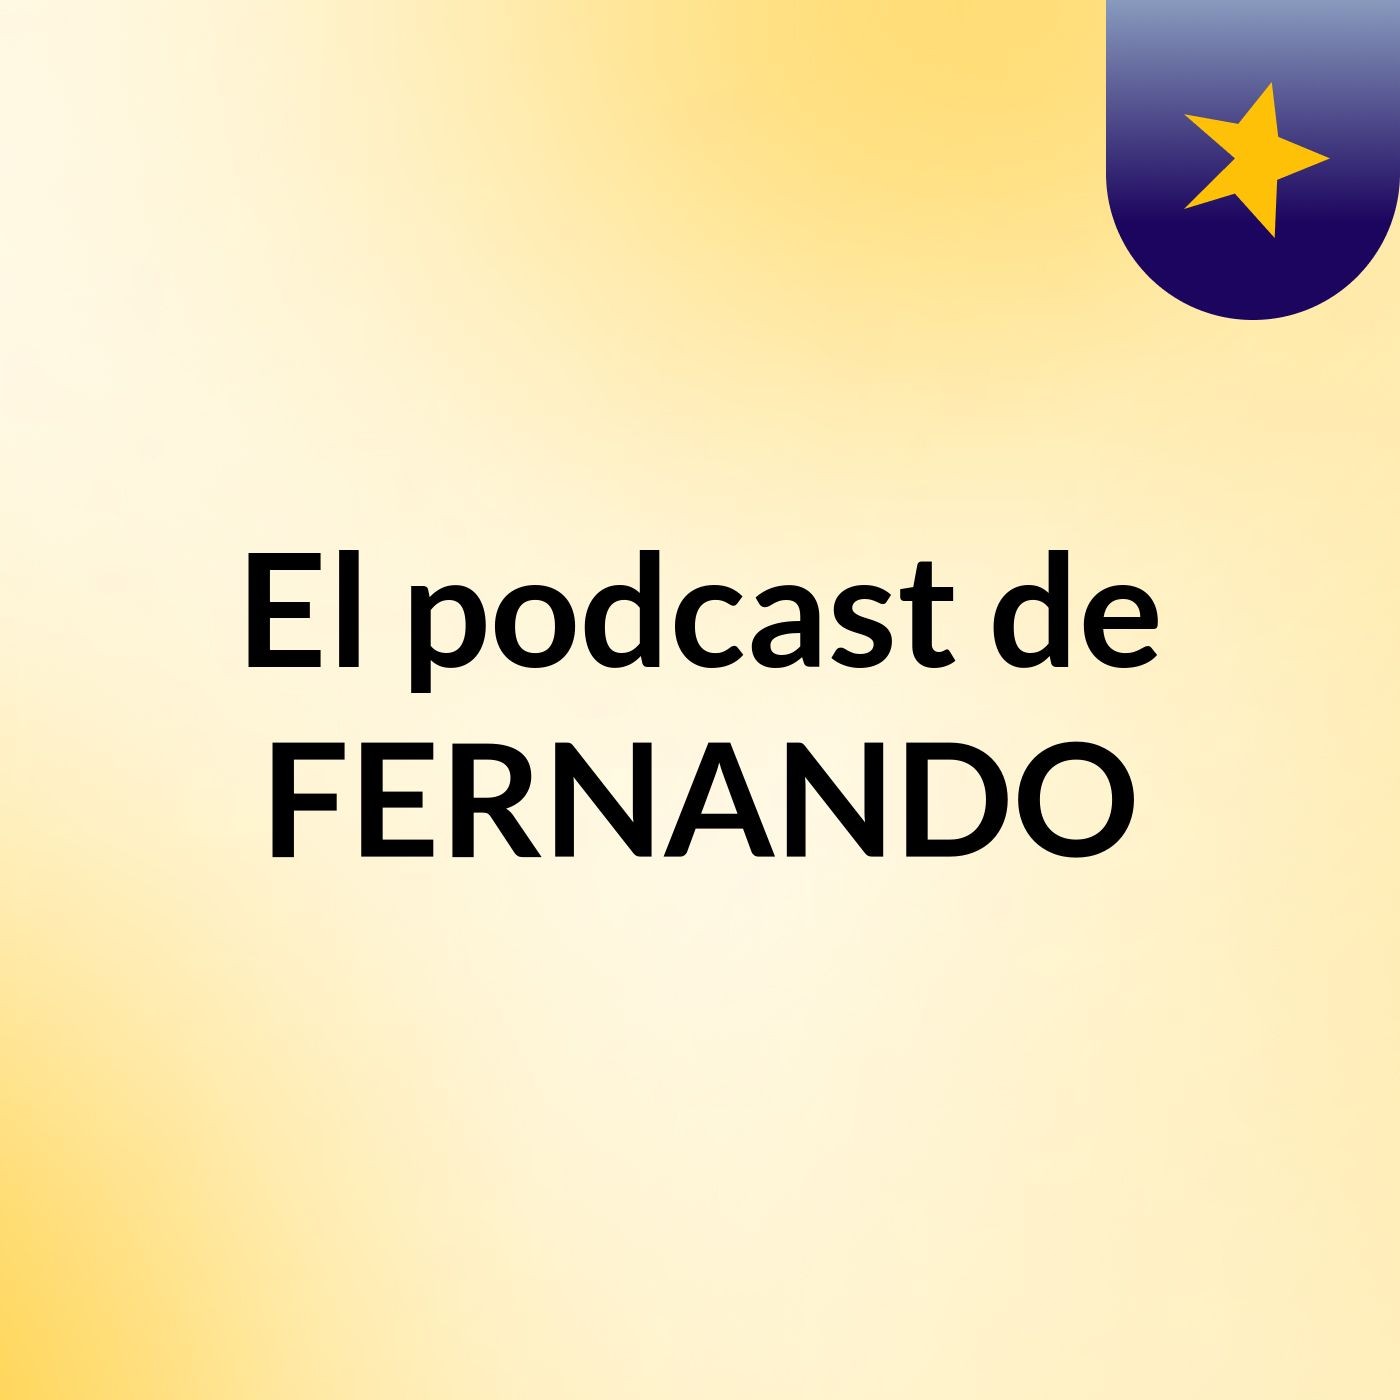 El podcast de FERNANDO